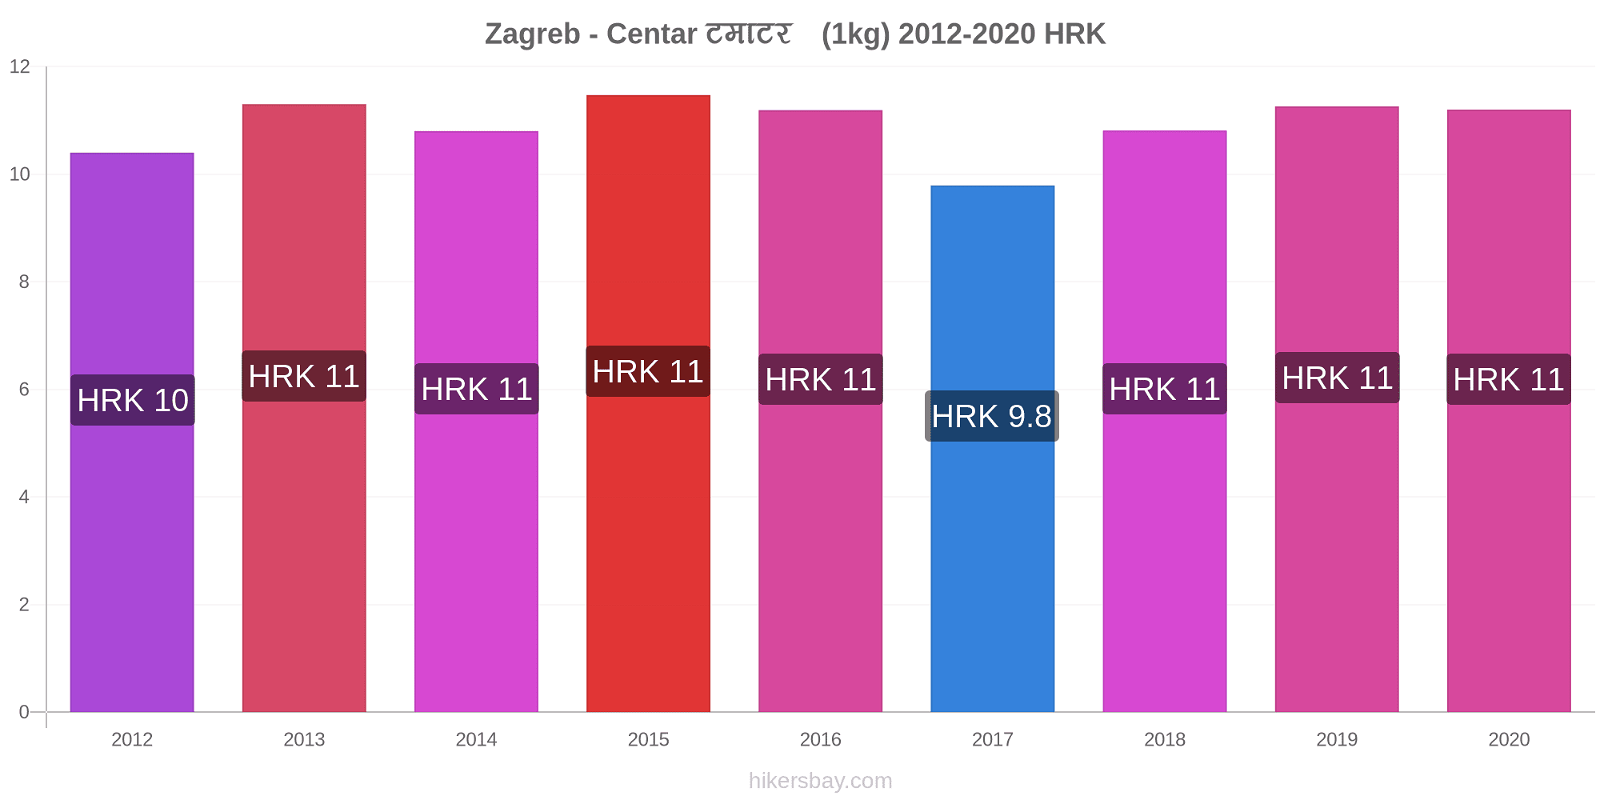 Zagreb - Centar मूल्य परिवर्तन टमाटर (1kg) hikersbay.com